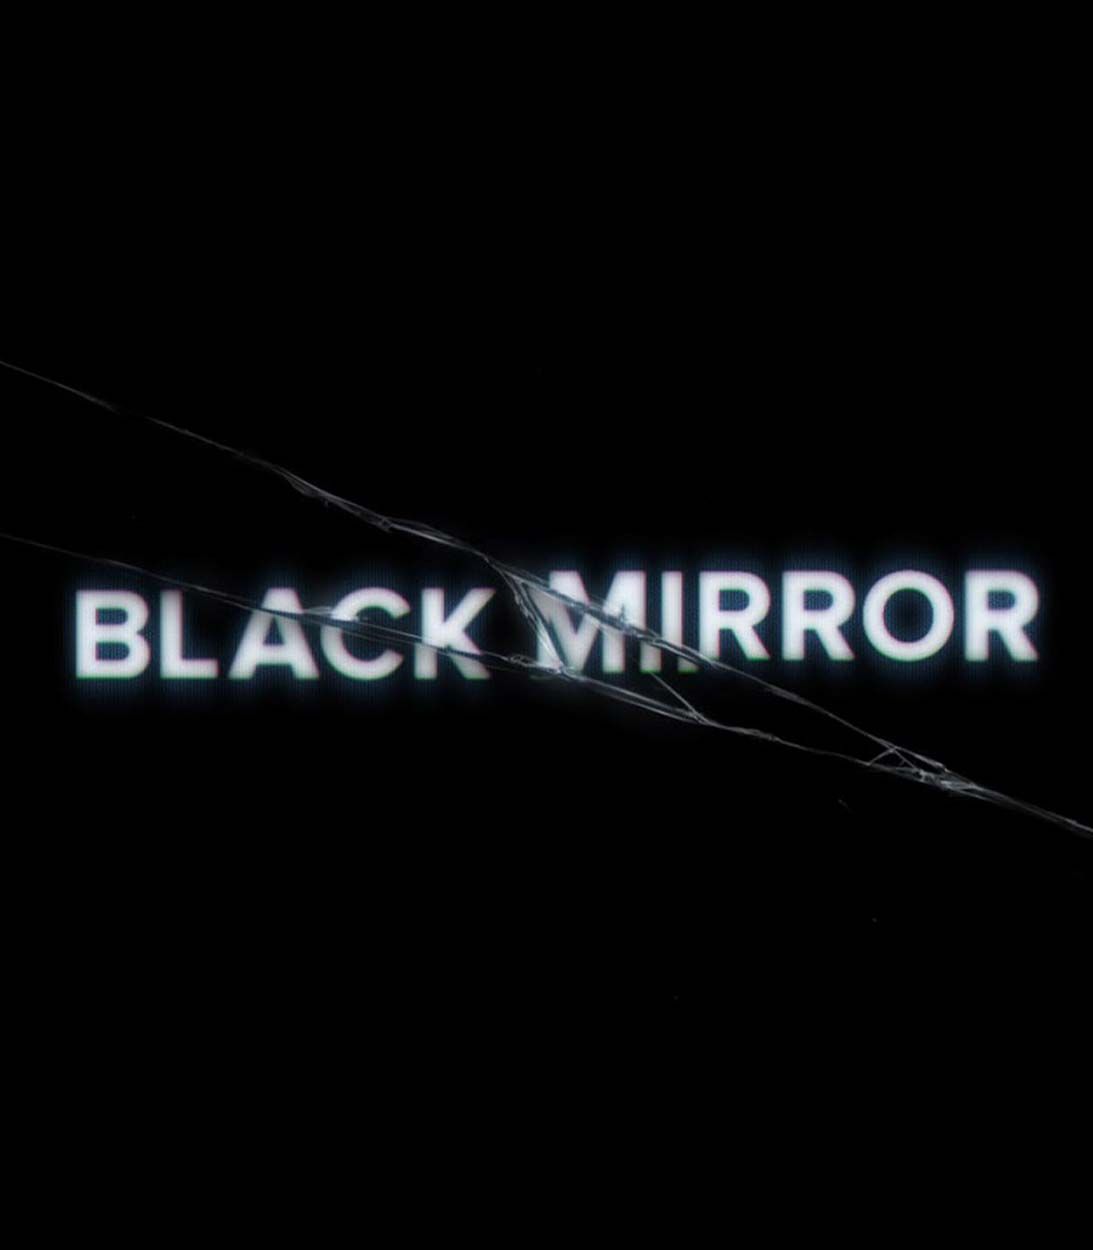 Black Mirror vertical